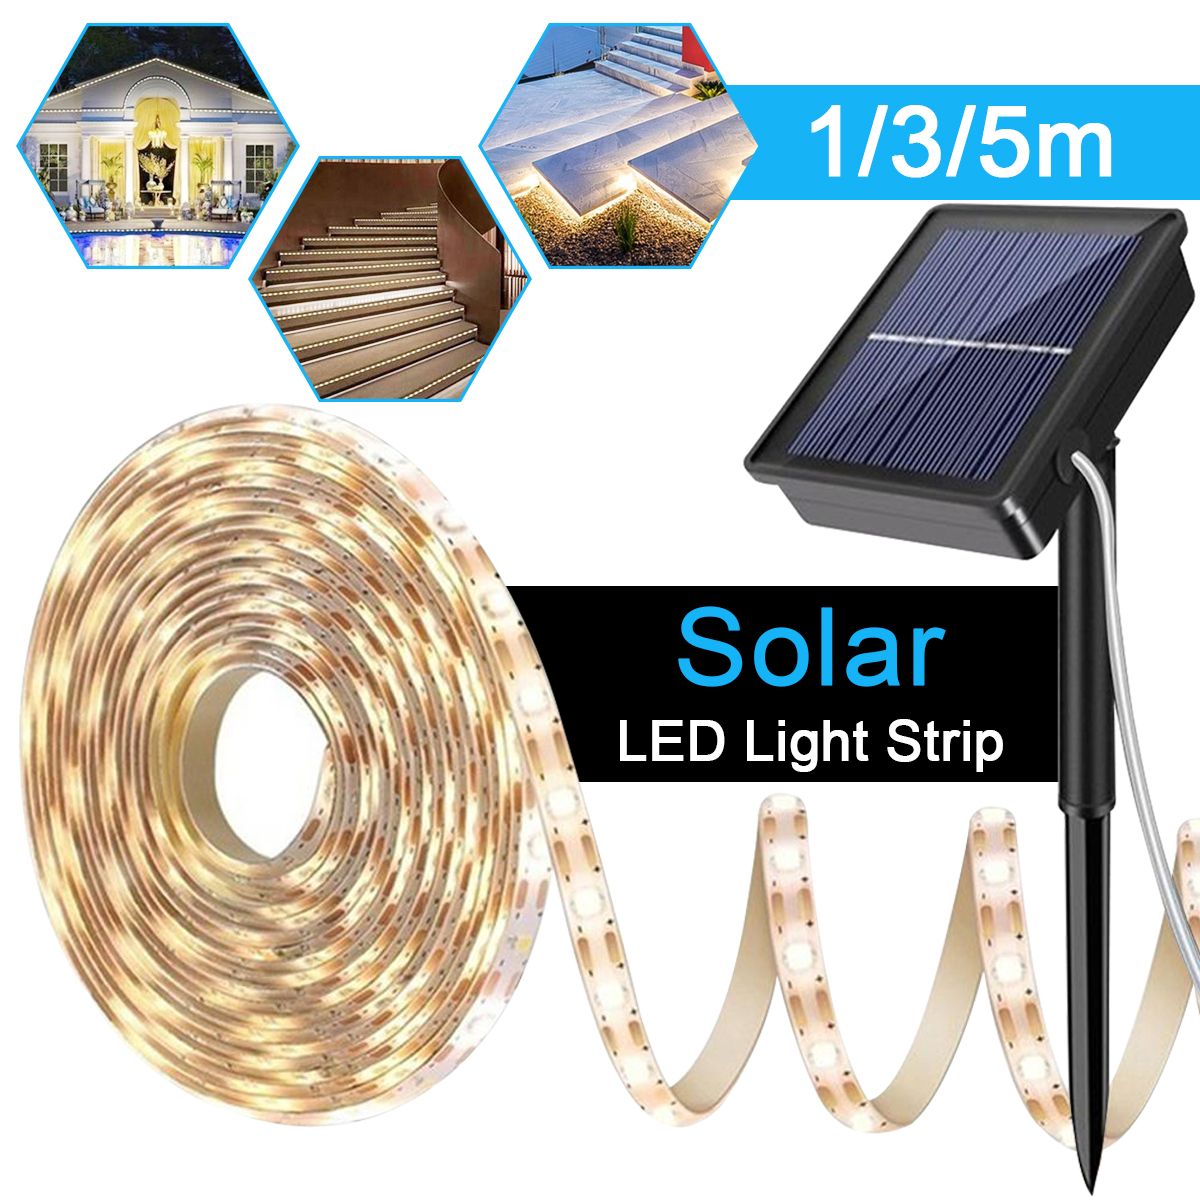 Warm-White-Solar-Power-Light-Strip-2835-LED-IP65-Waterproof-Outdoor-Garden-Decor-1738012